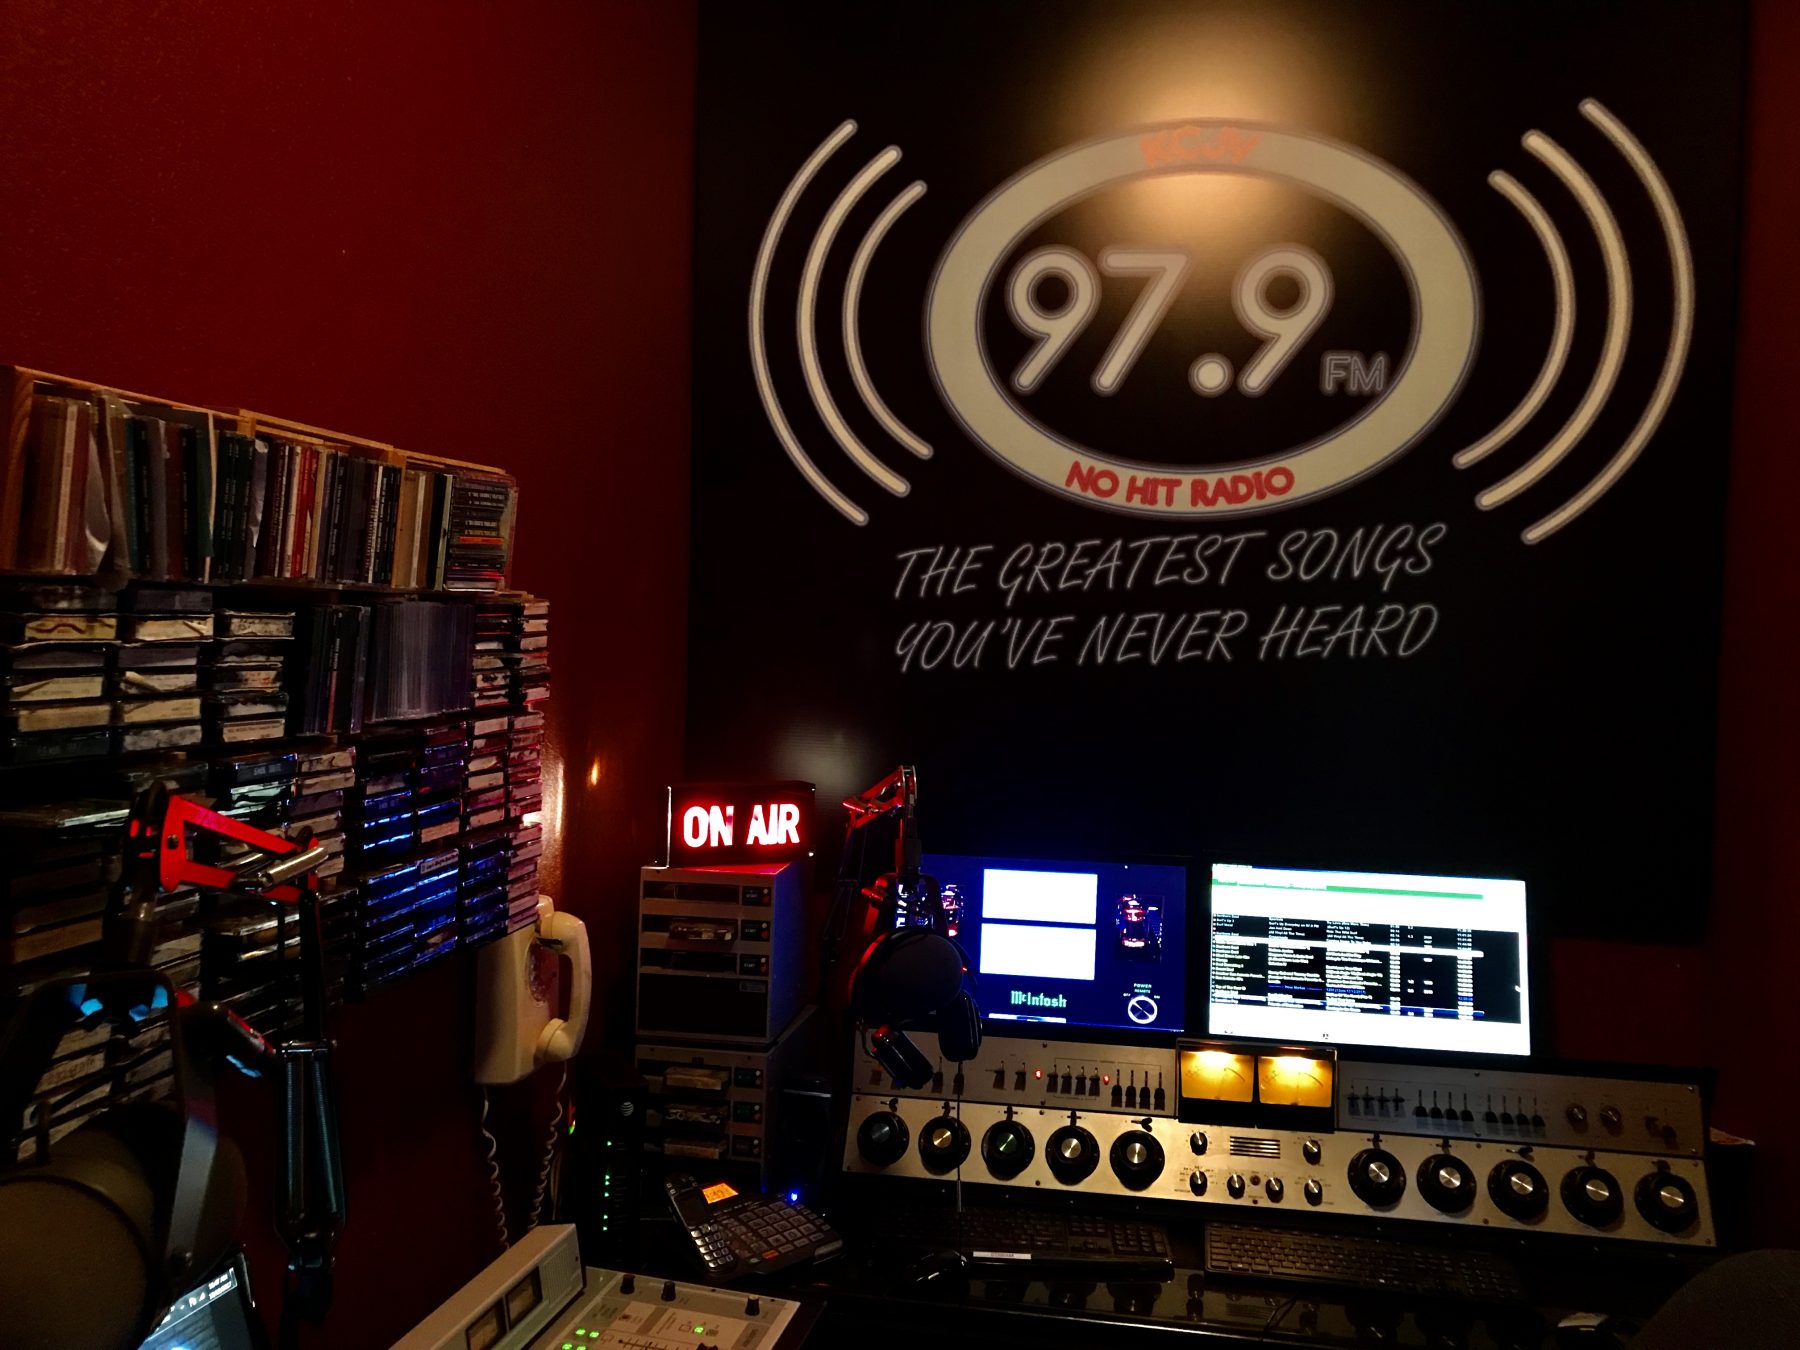 Inside the 97.9 KCJV radio station